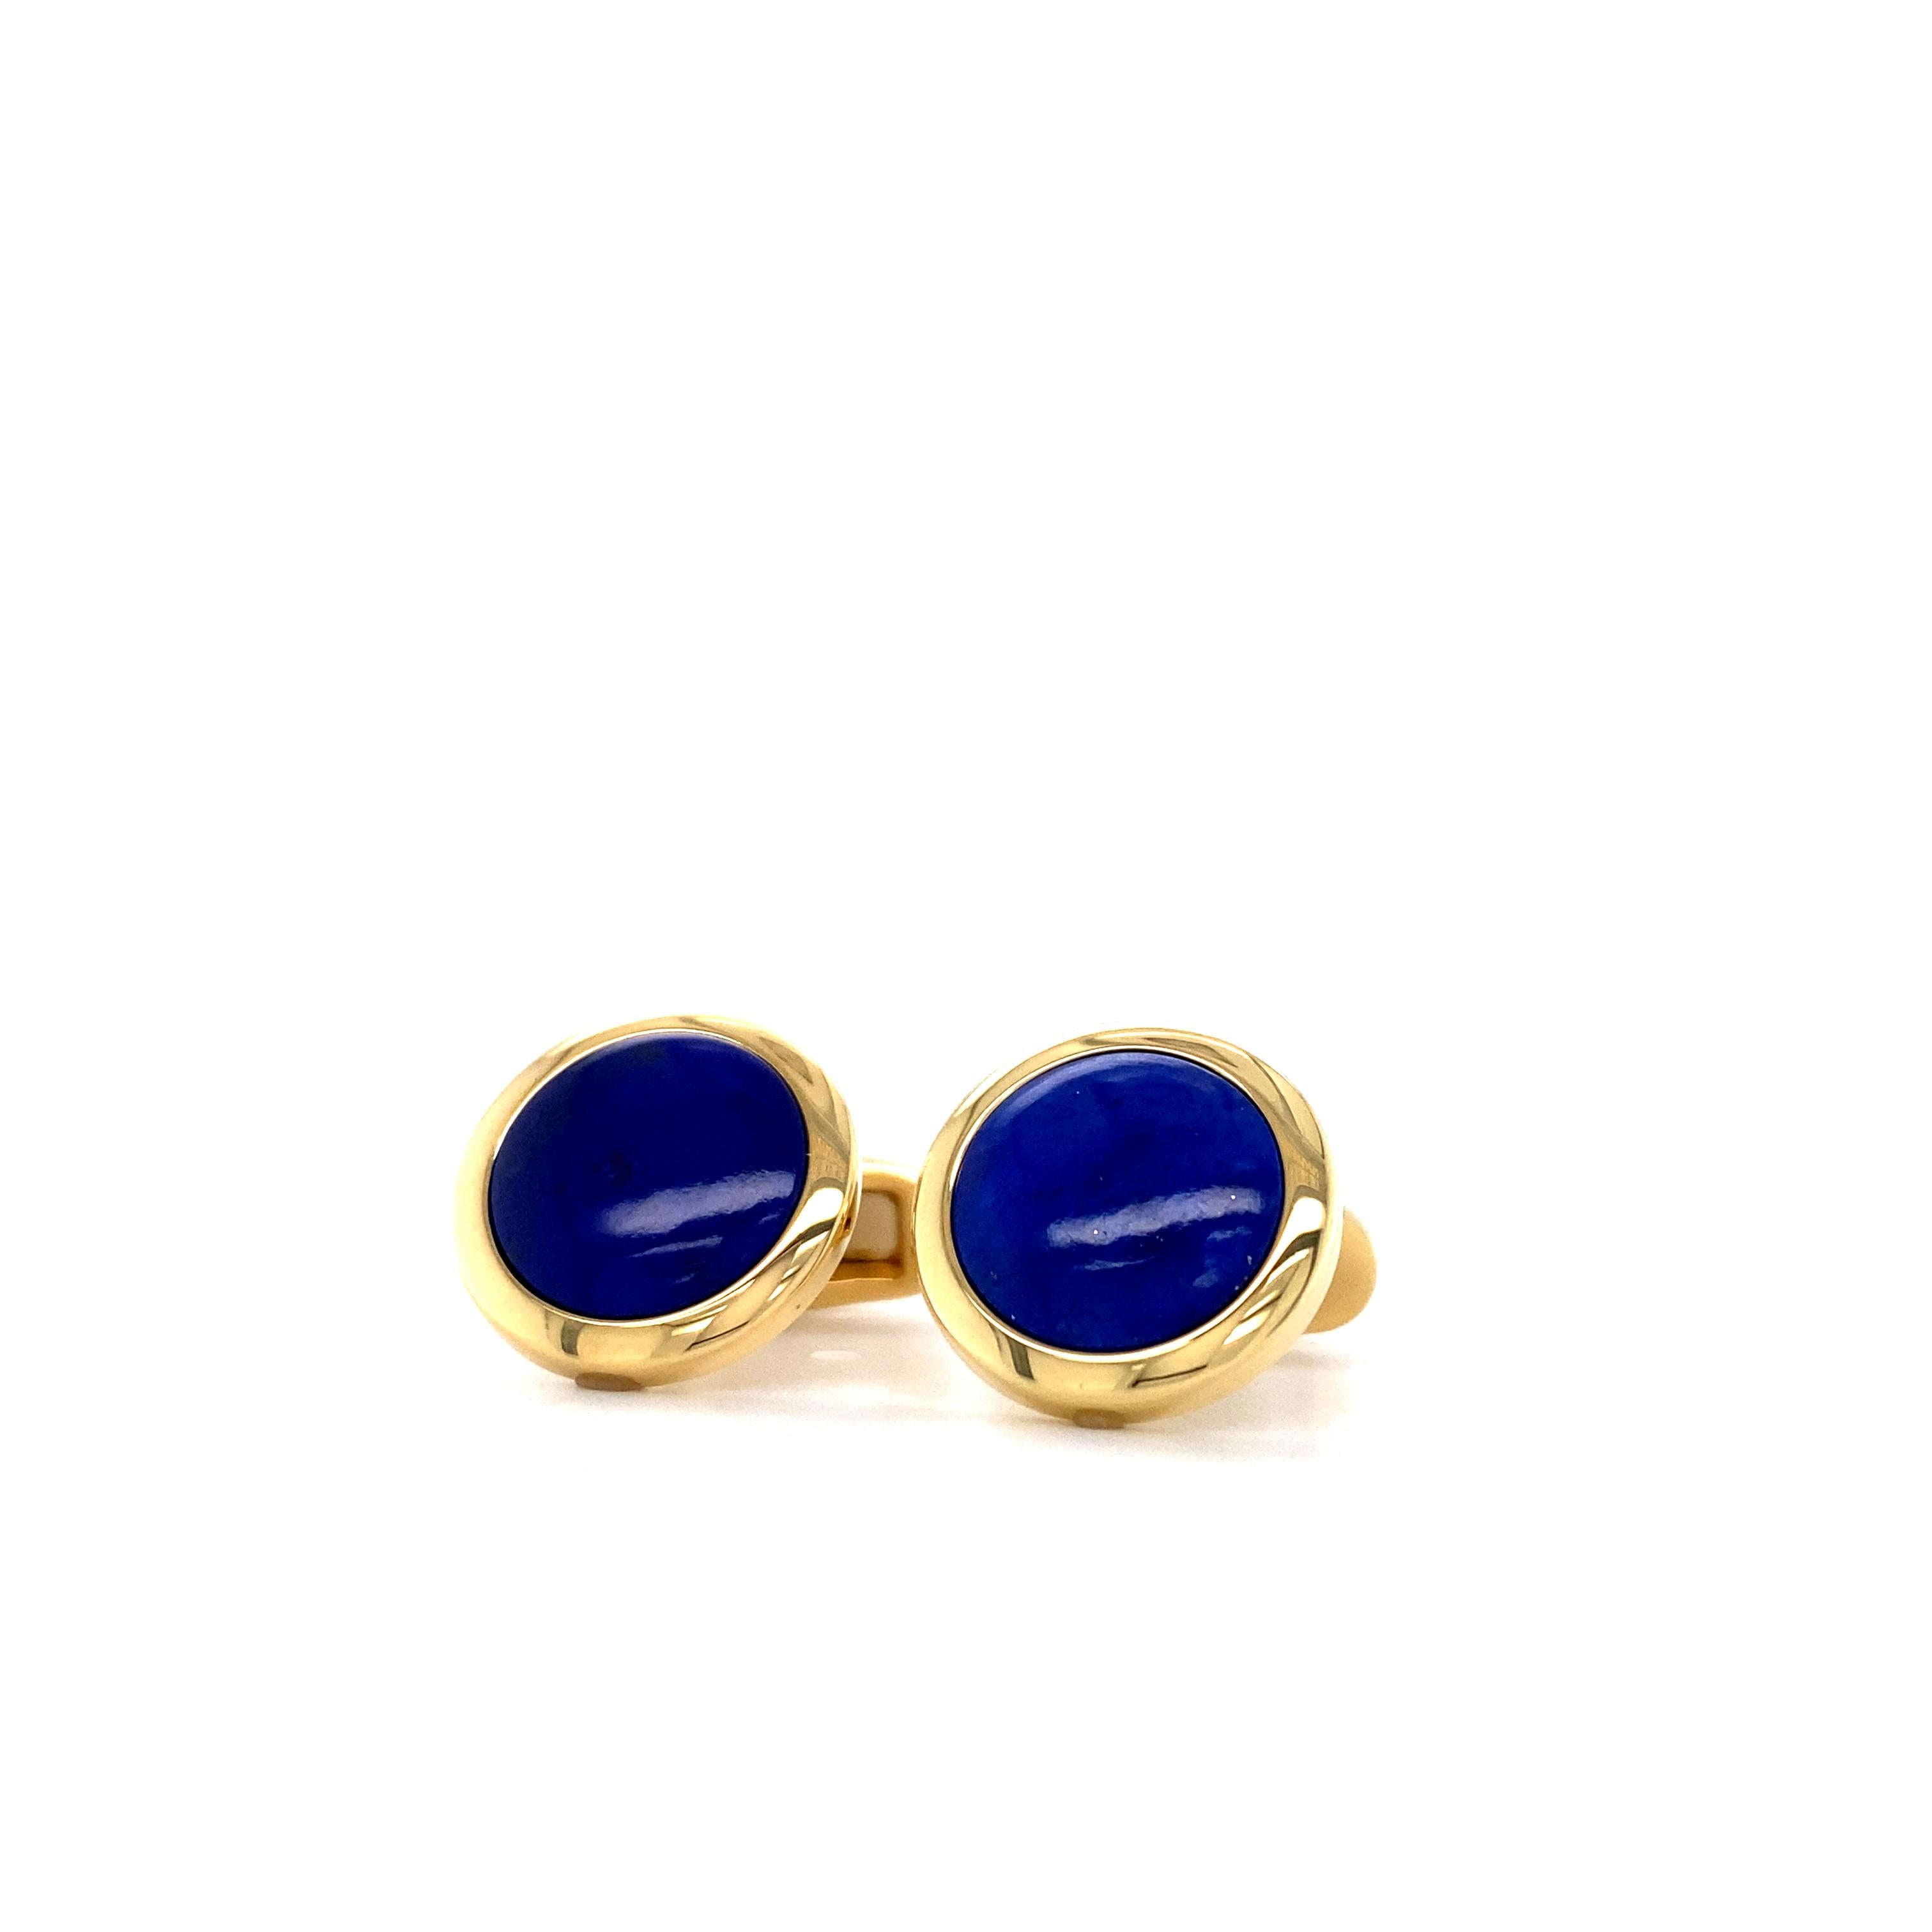 Women's or Men's Round Cufflinks - 18k Yellow Gold - Lapis Lazuli Inlays - Diameter 15.5 mm For Sale